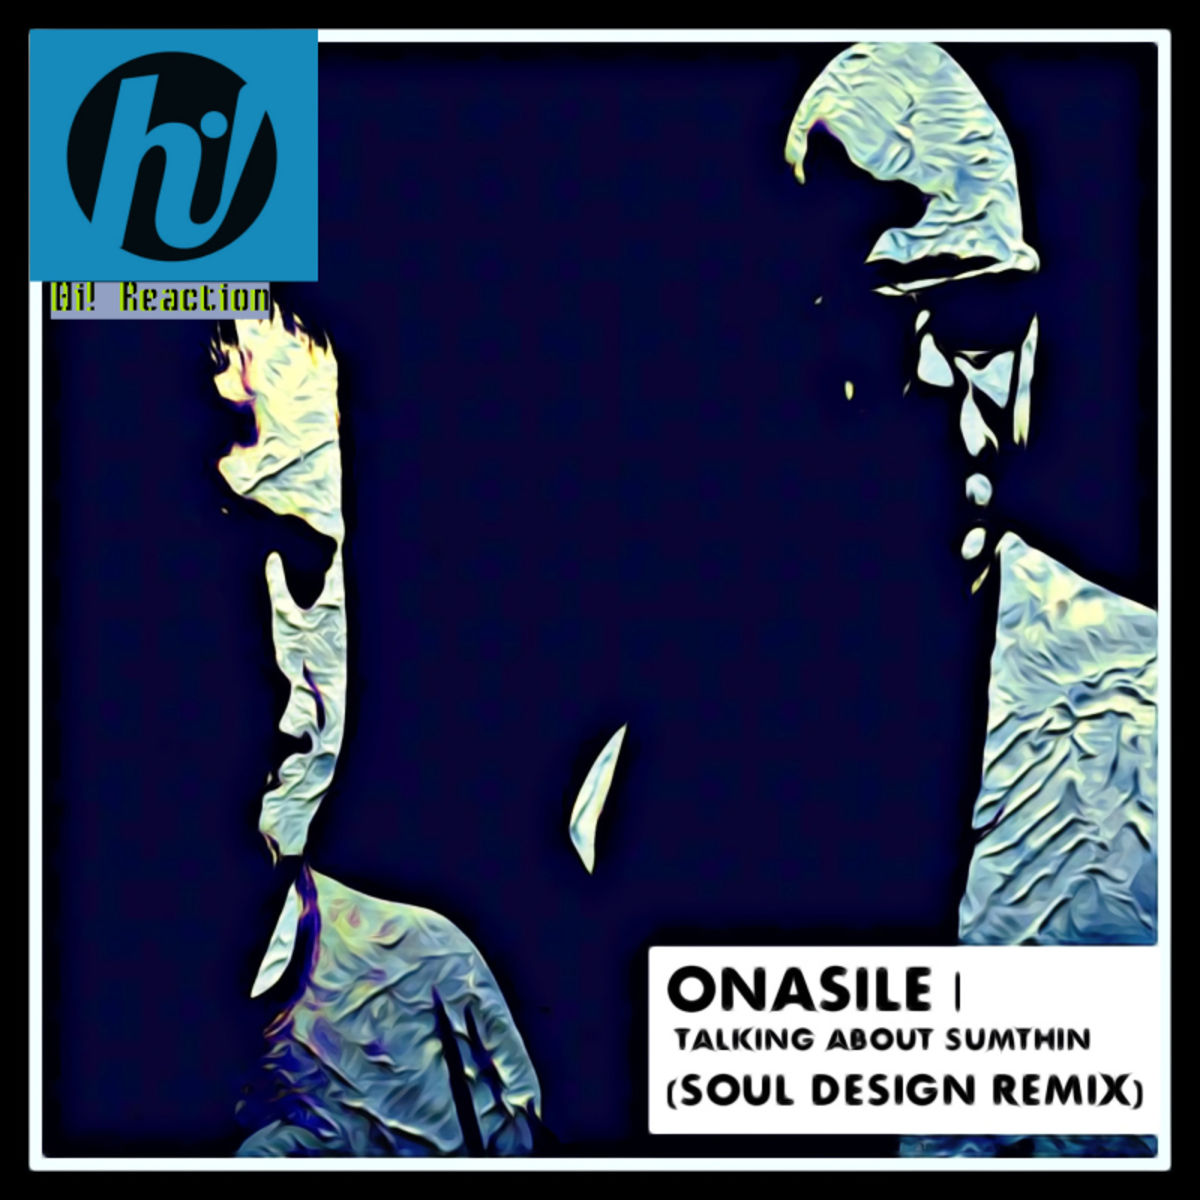 Onasile - Talkin Bout Sumthin (Soul Design Remix) / Hi! Reaction